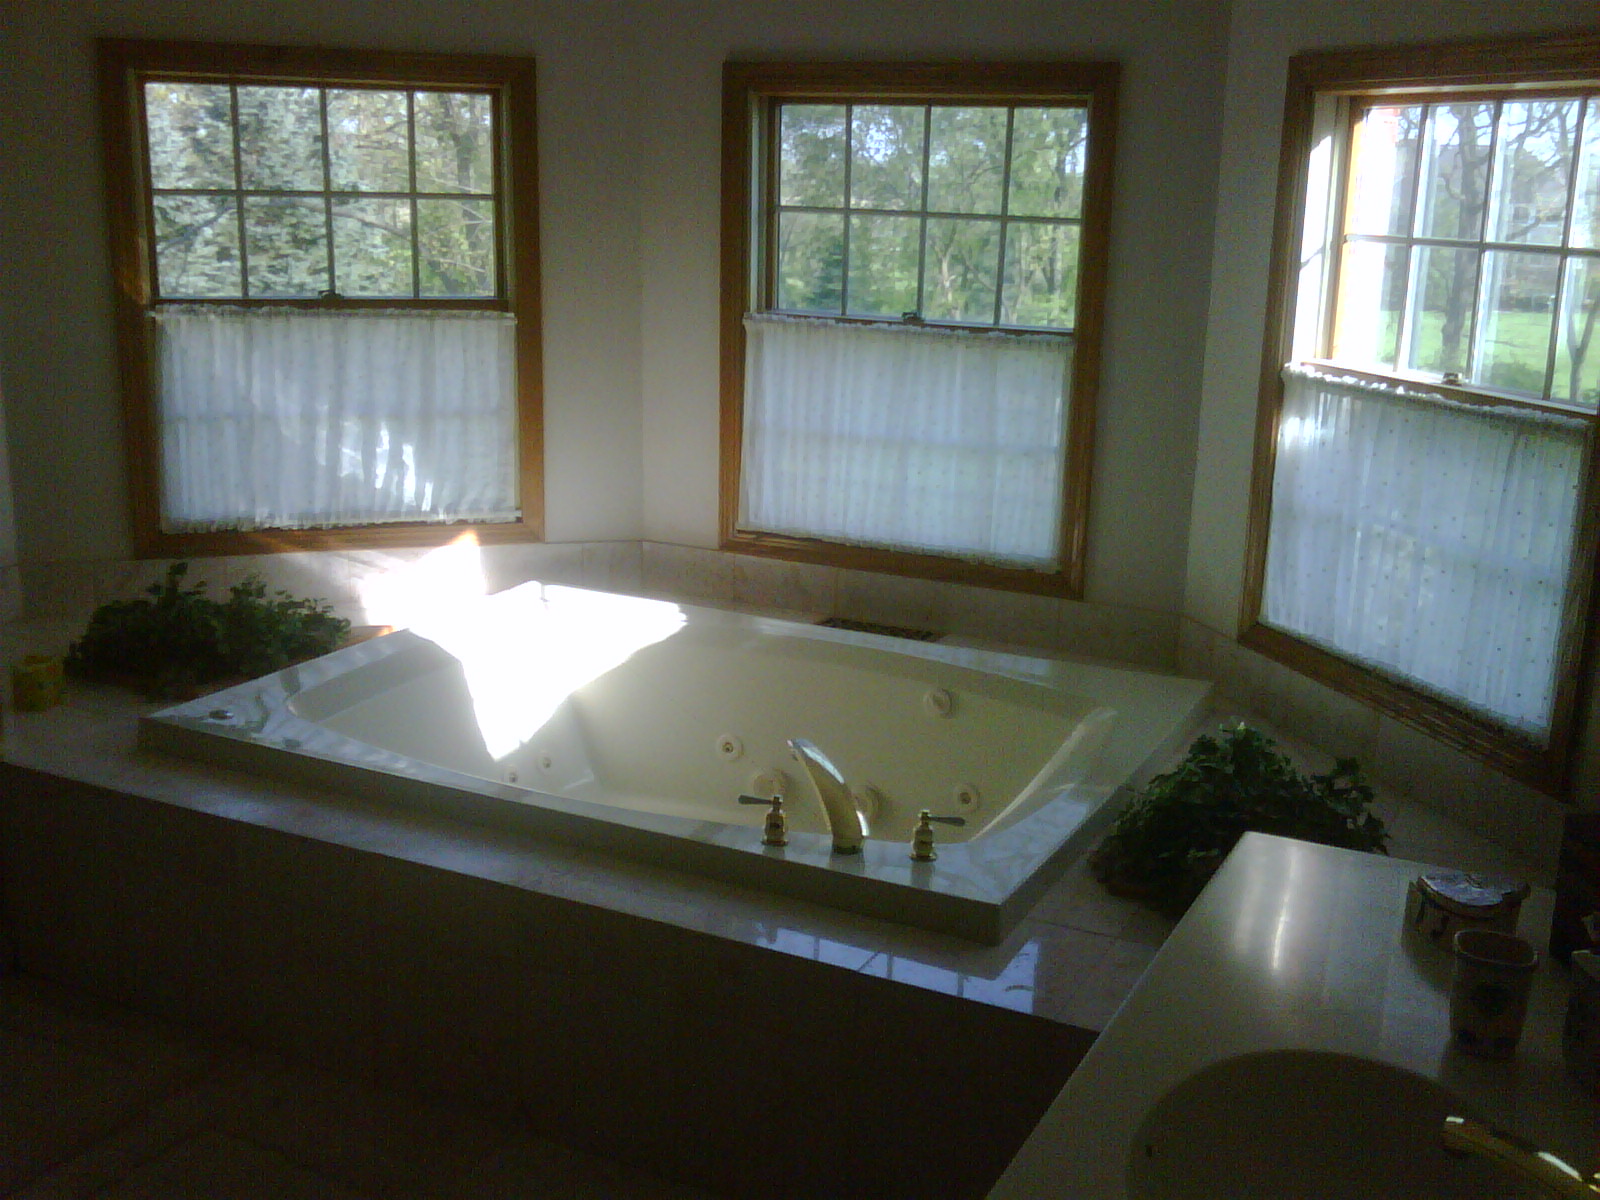 Luxuriate in a new tub